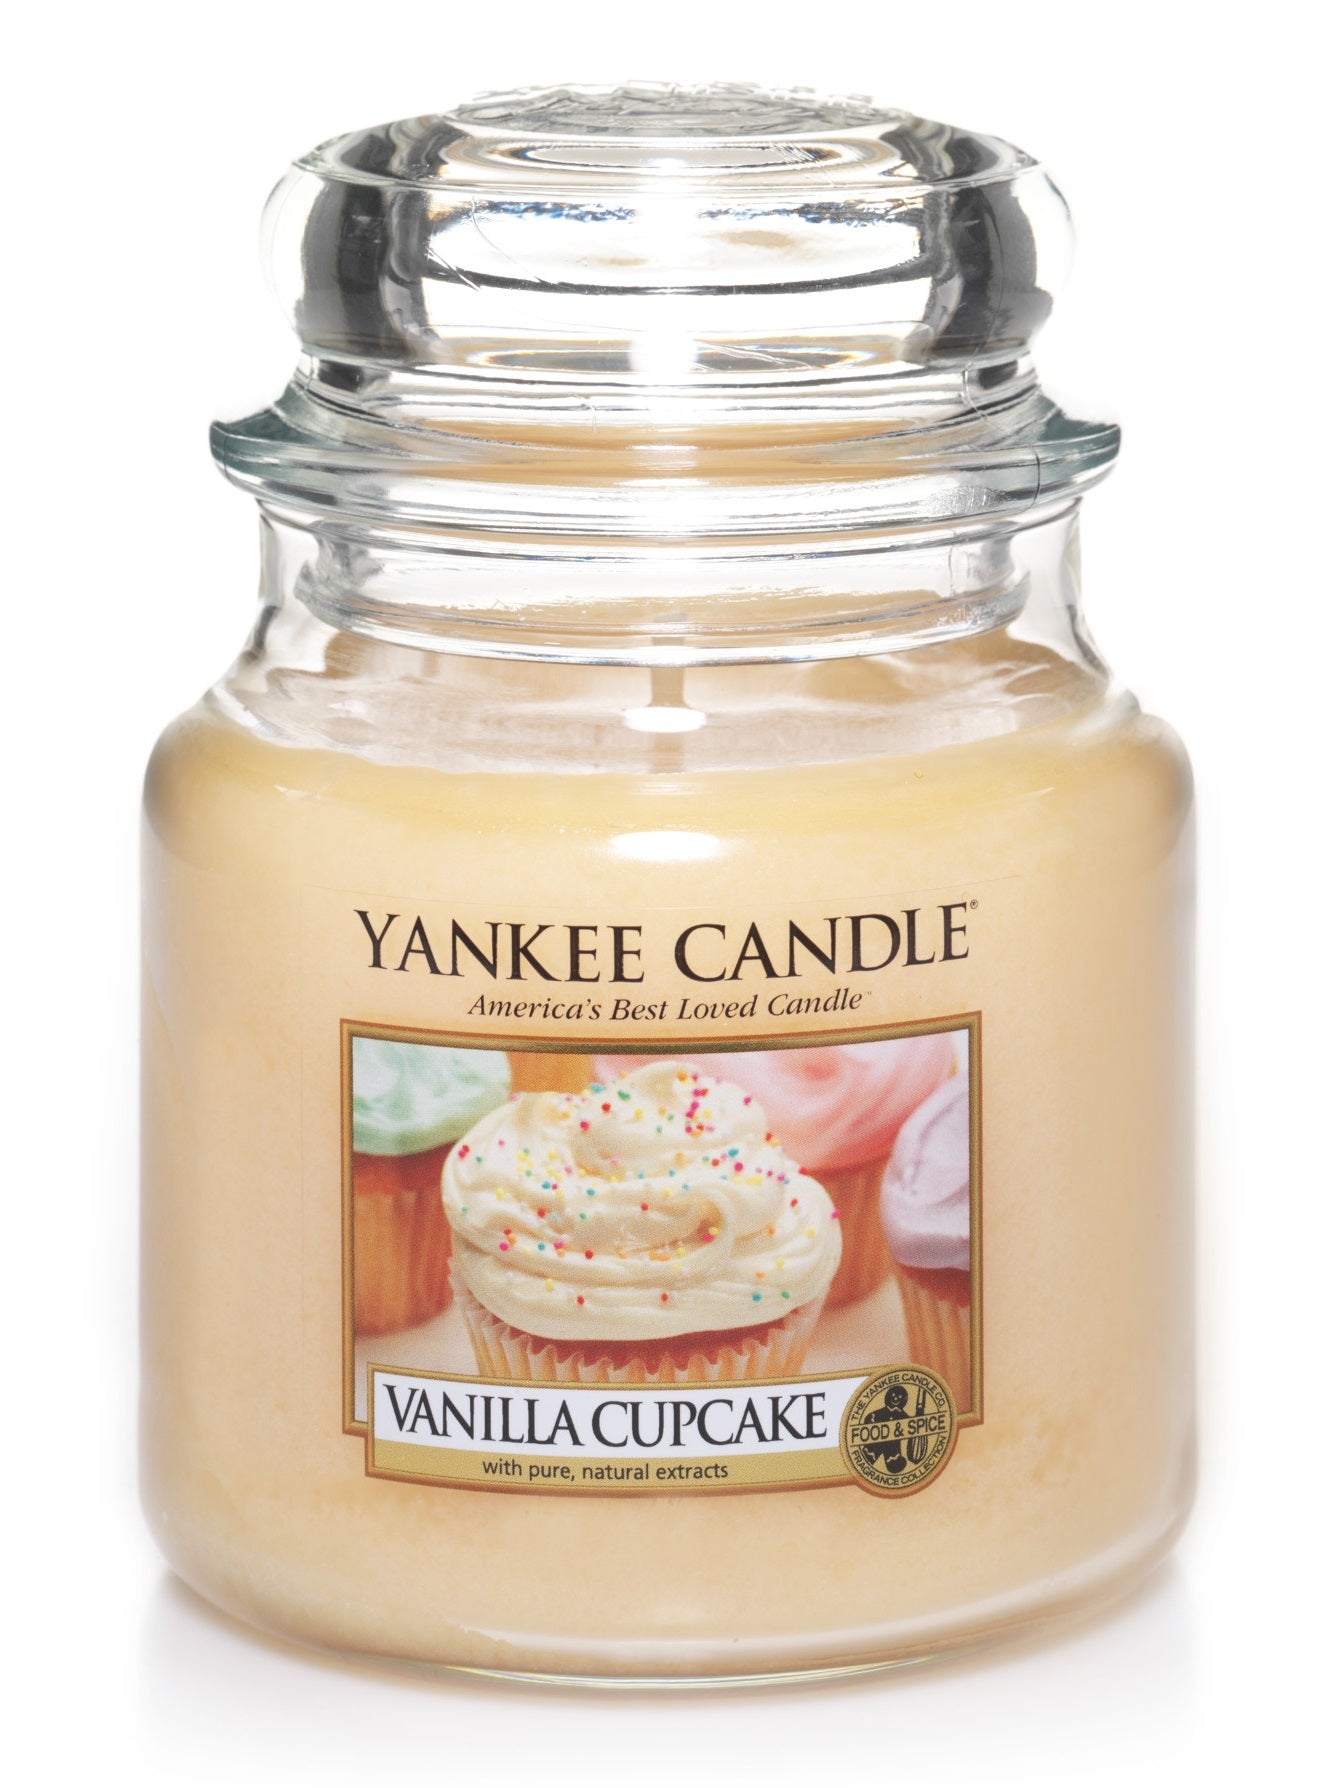 VANILLA CUPCAKE -Yankee Candle- Giara Media – Candle With Care